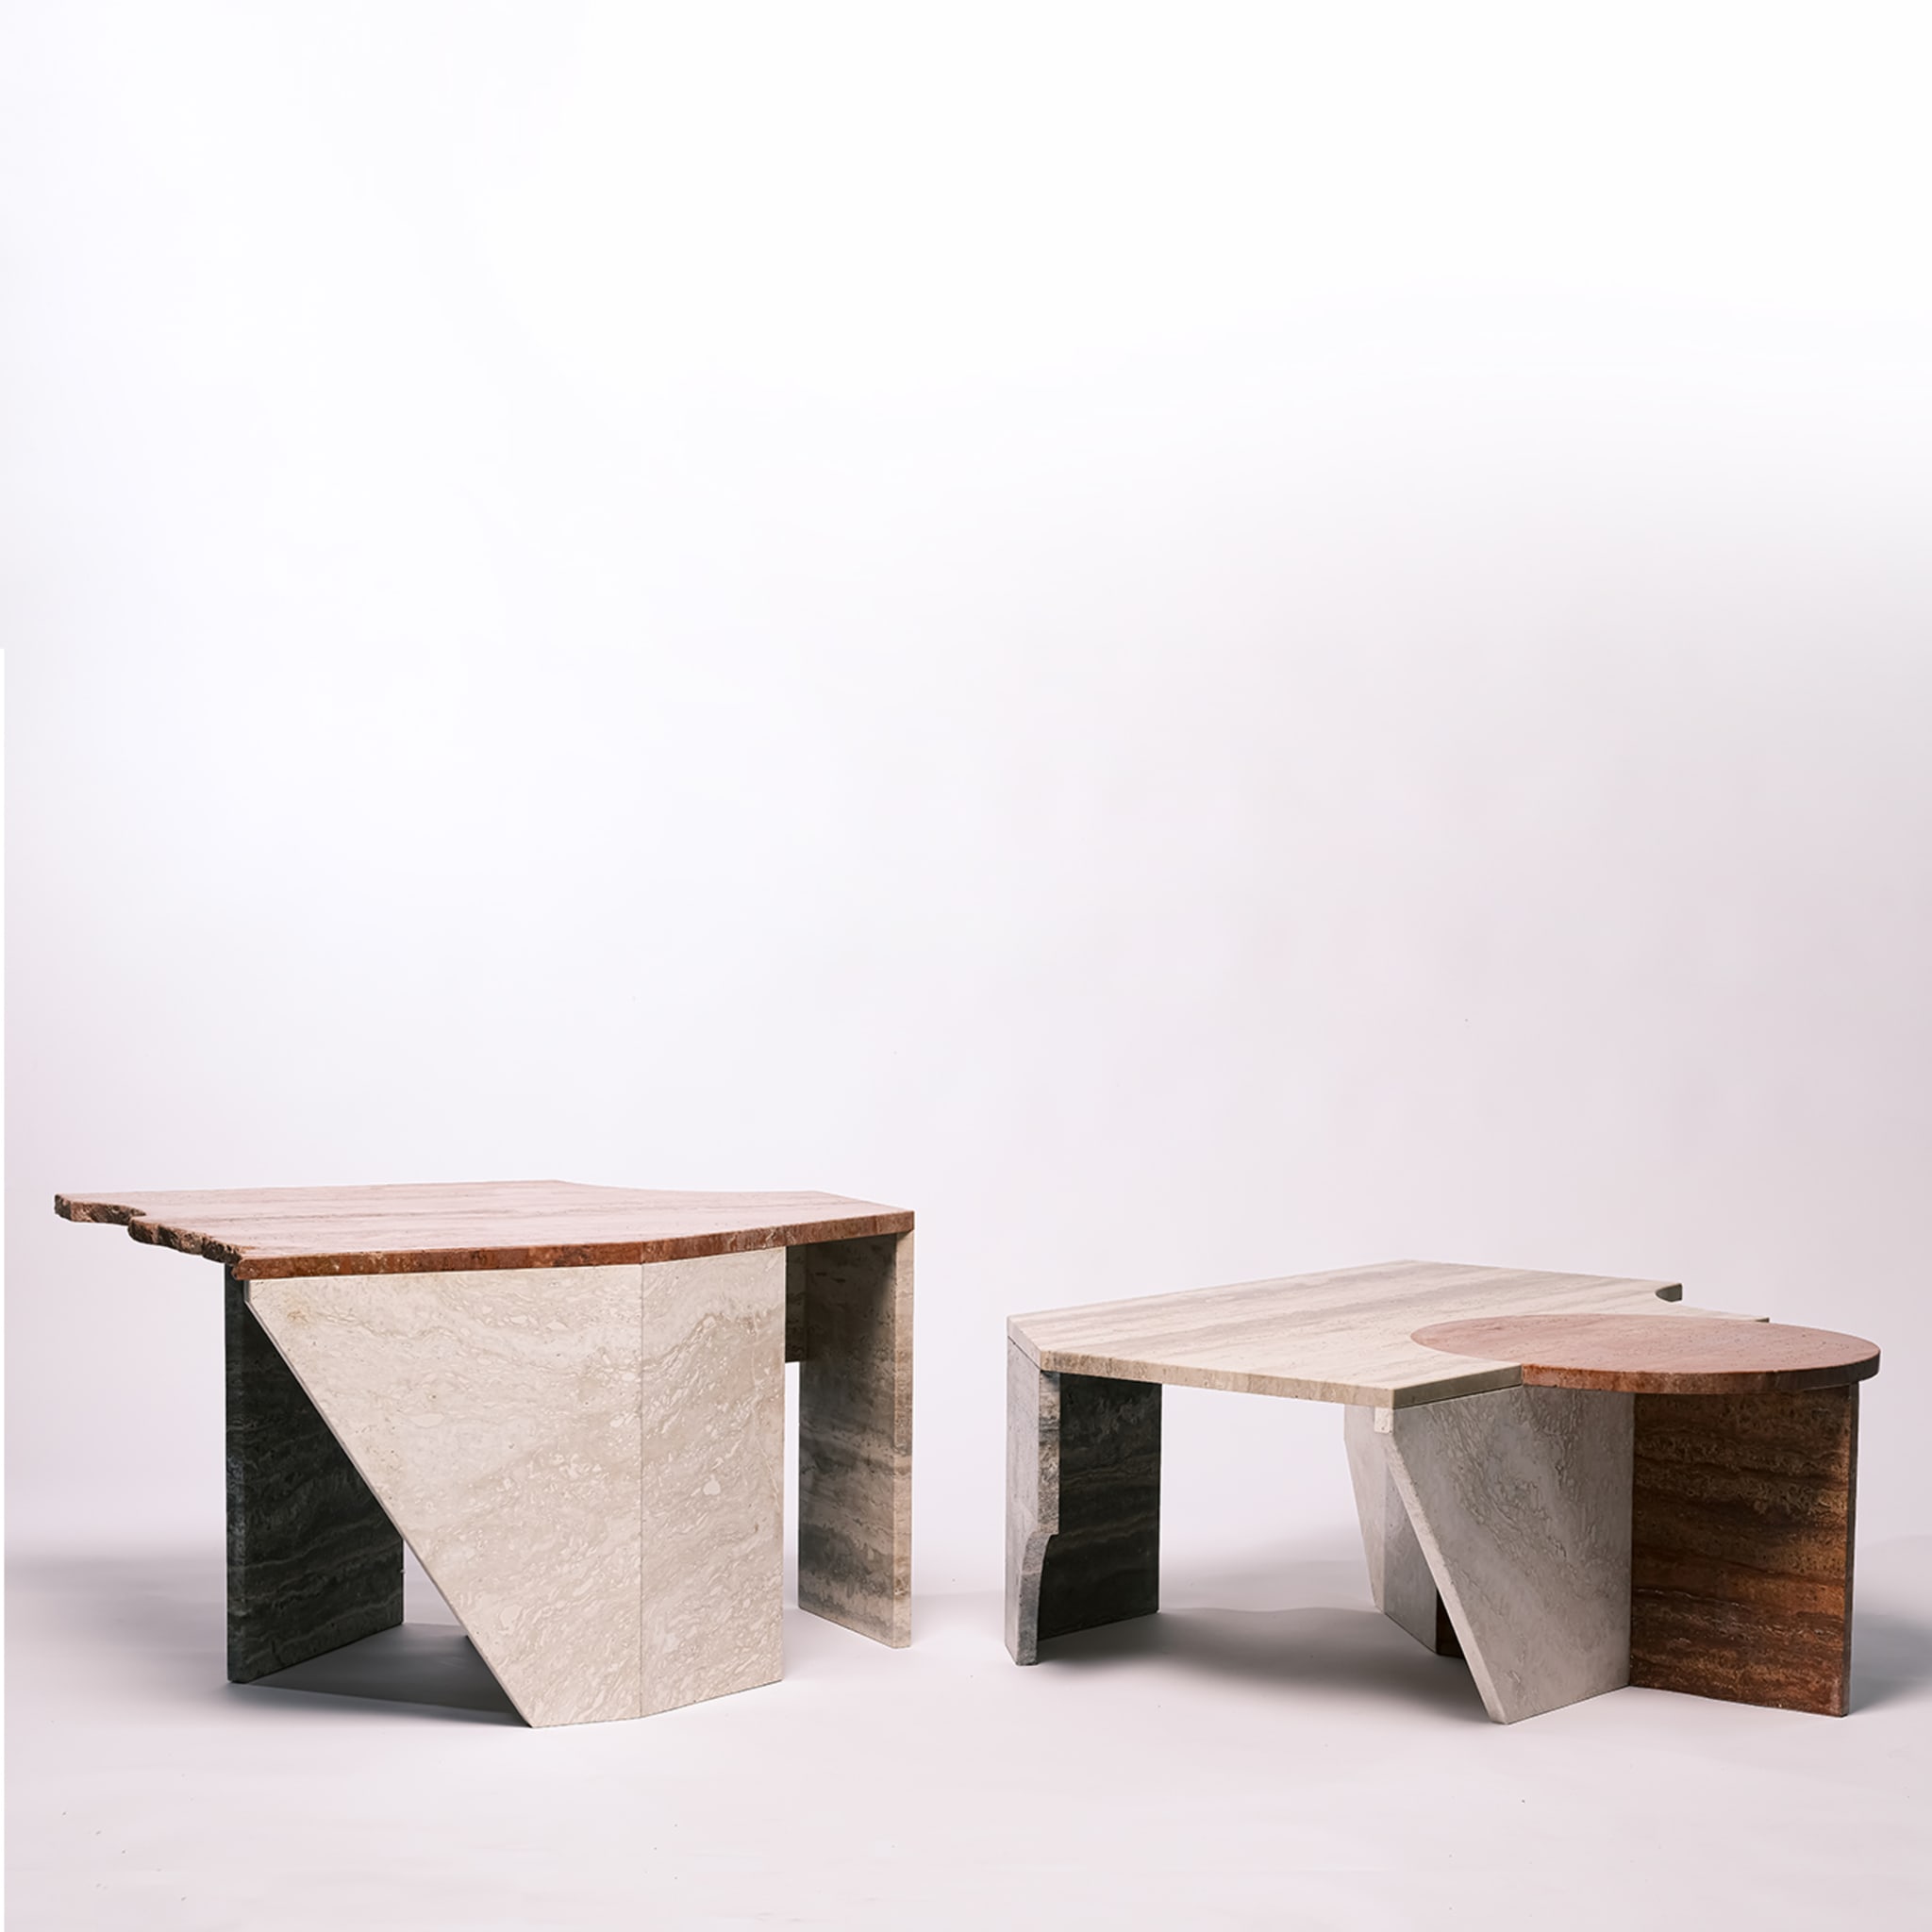 Ritagli B Asymmetrical Coffee Table #2 by Studiopepe Design - Alternative view 1